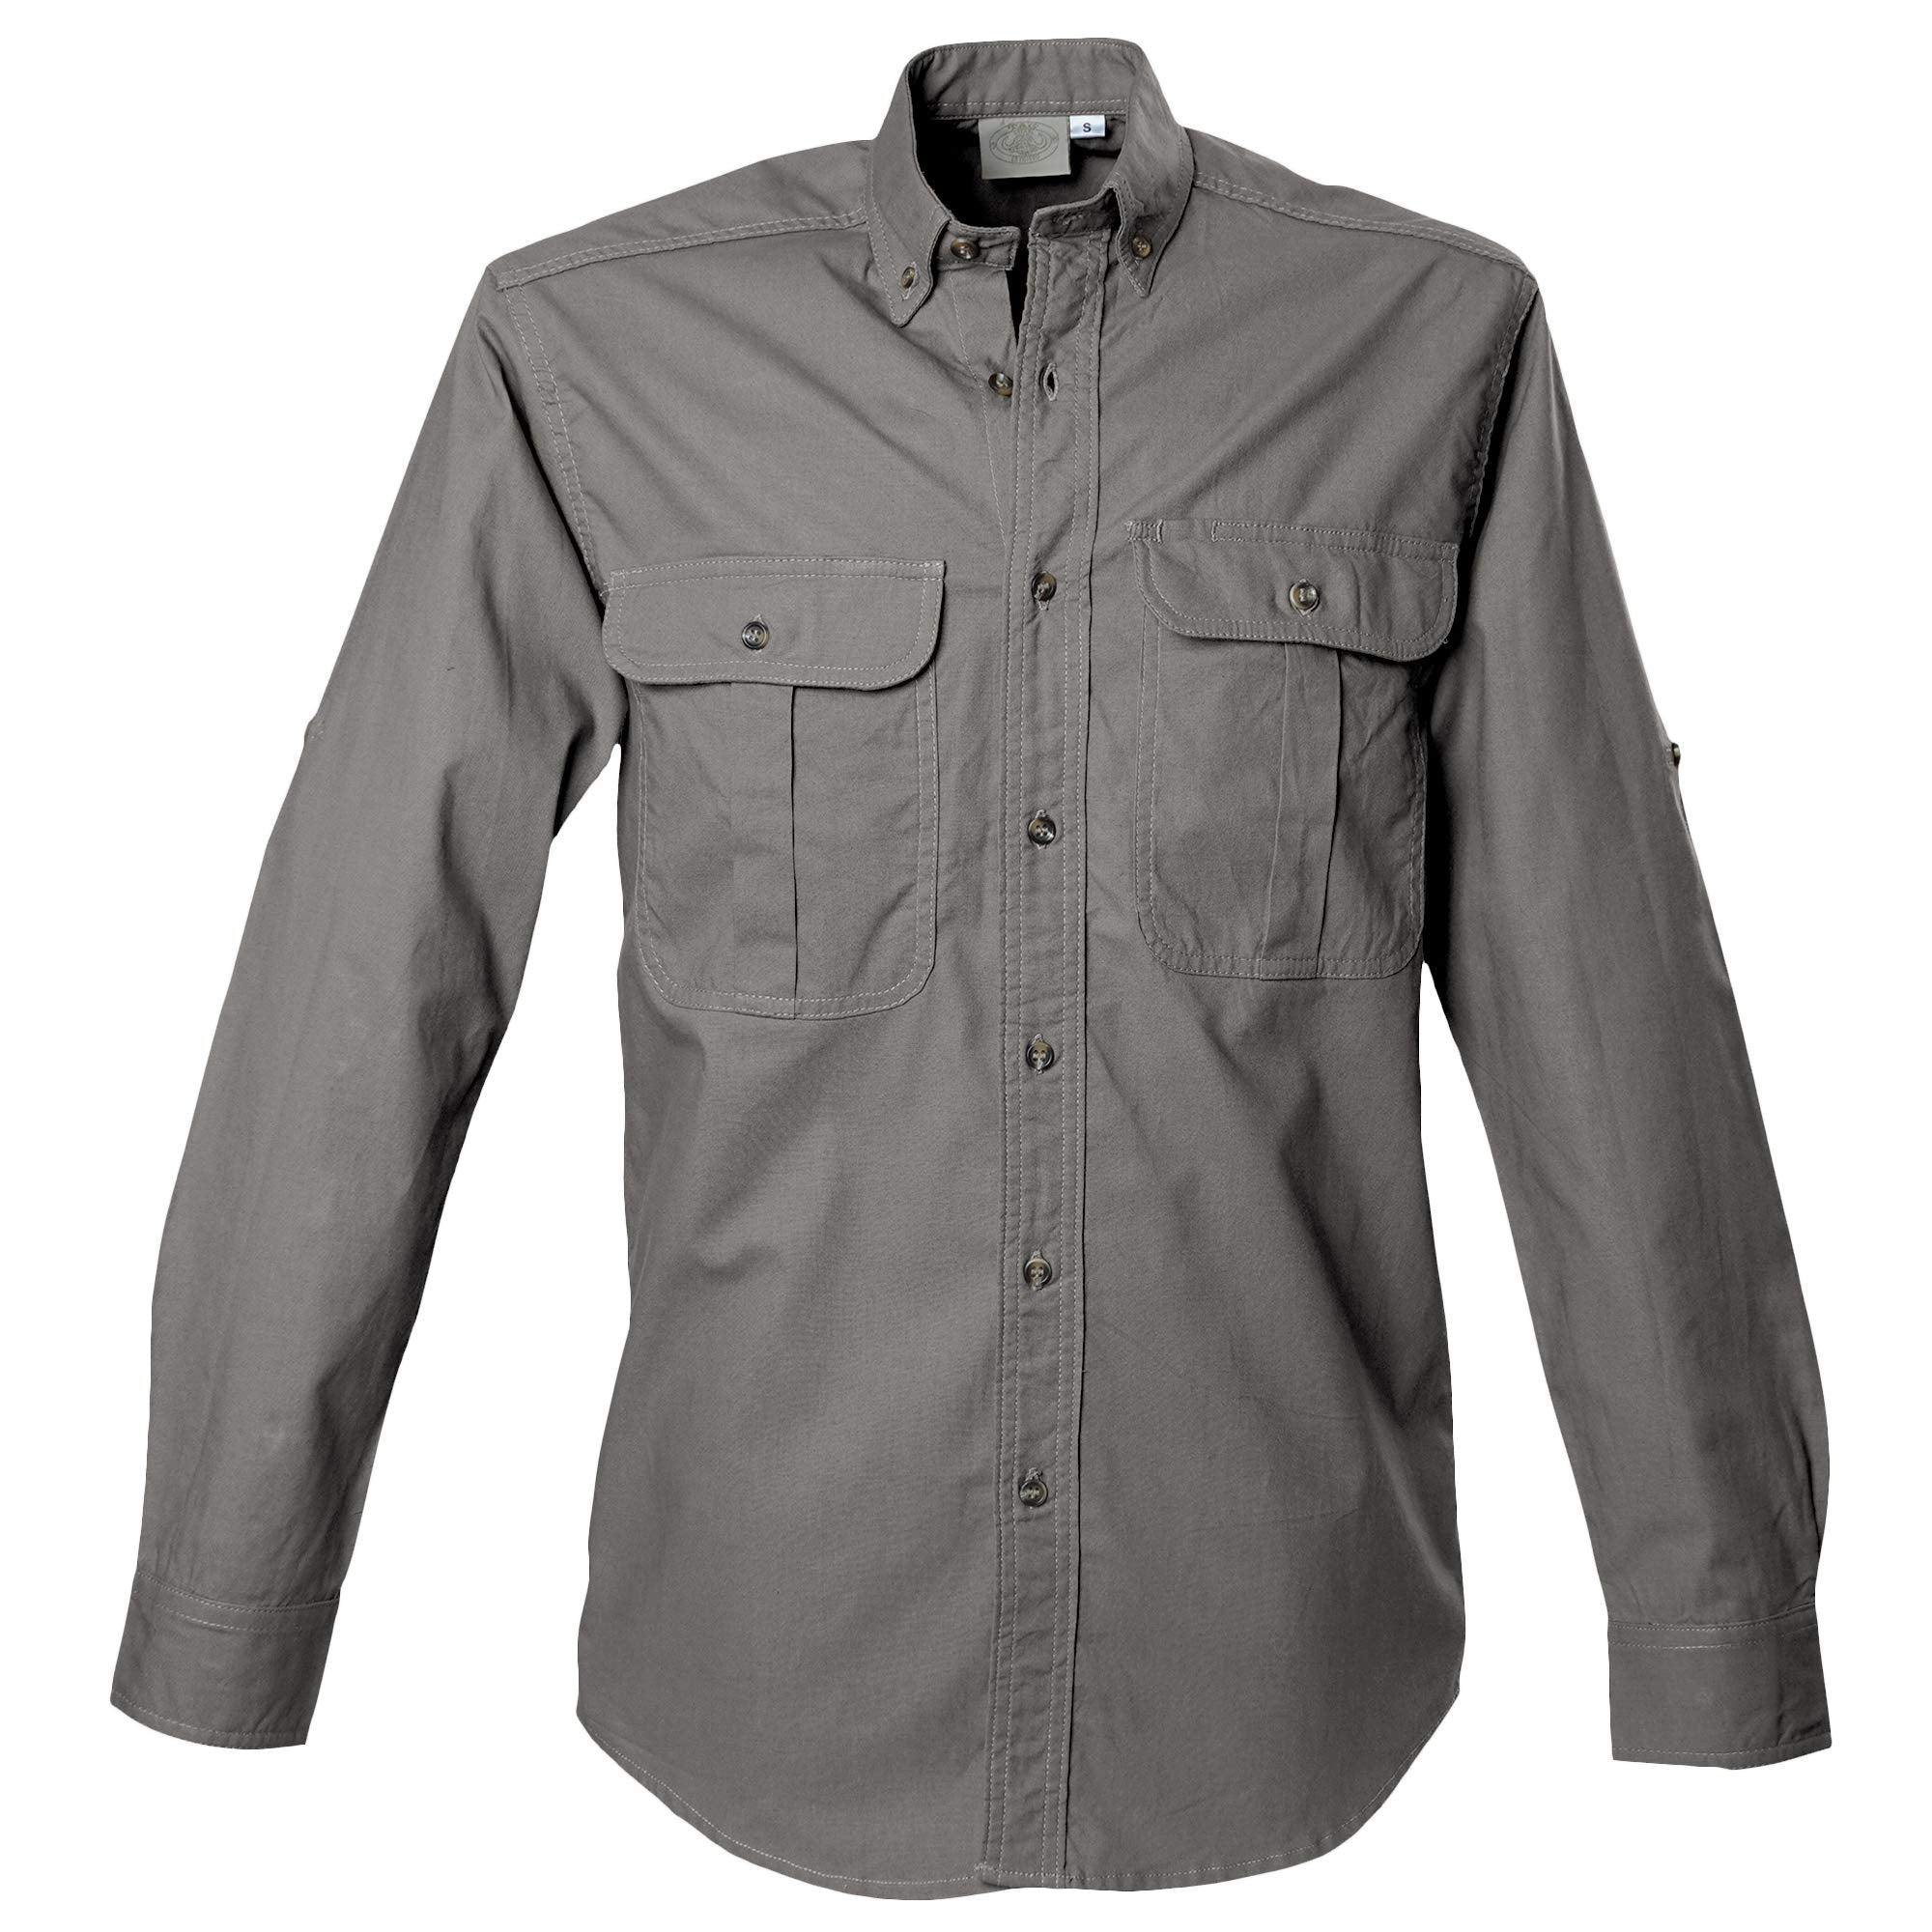 Tag Safari Men's Safari Short Sleeve Shirt W Chest Pockets (Khaki, XX-Large)